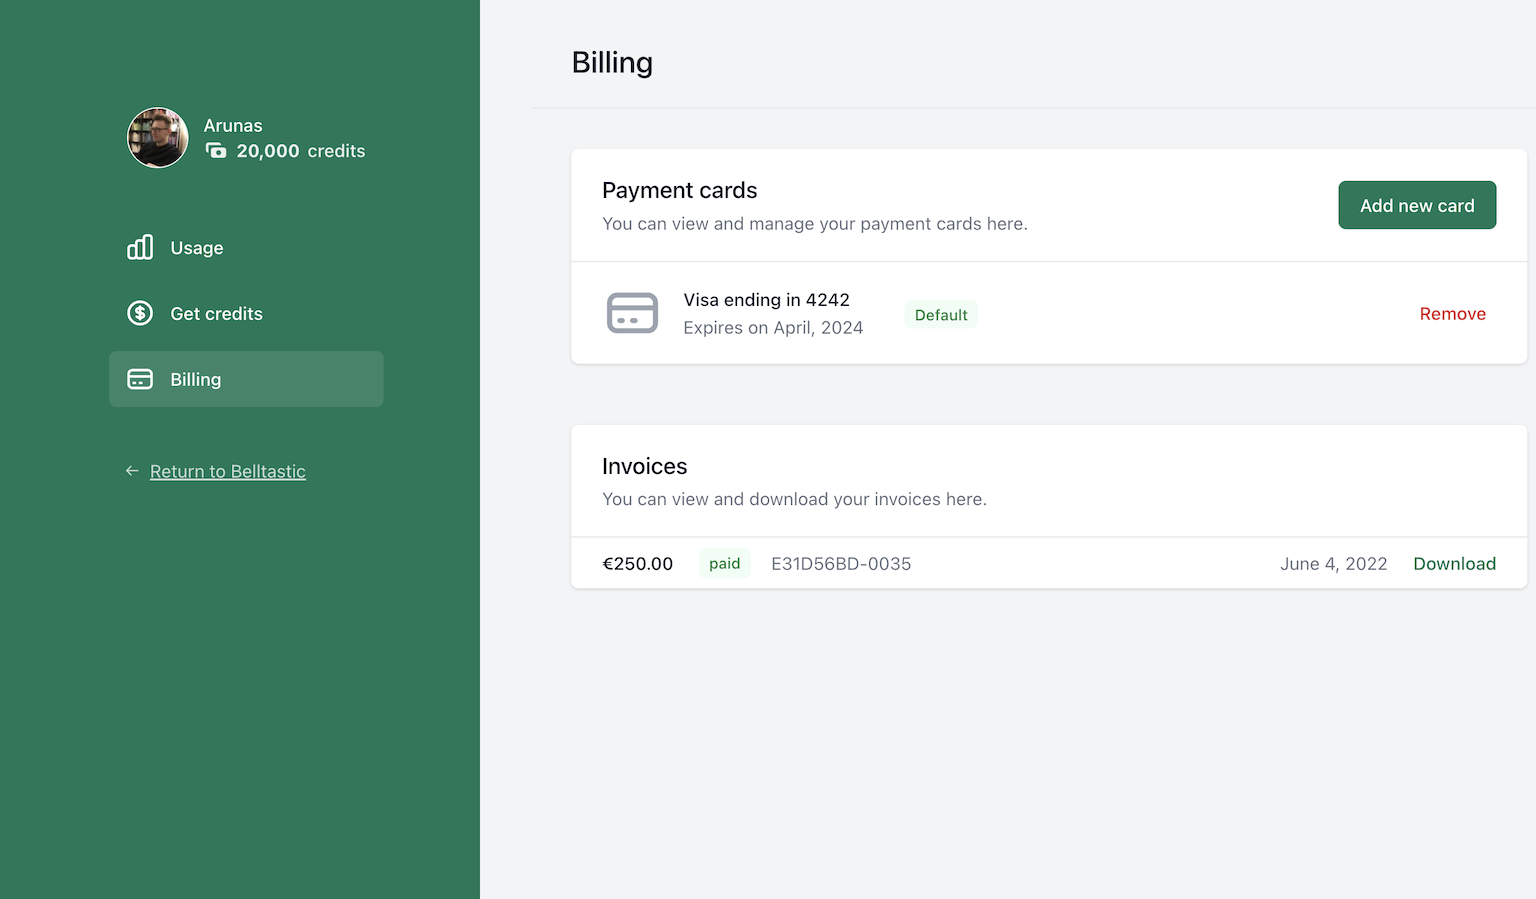 Customer billing page interface